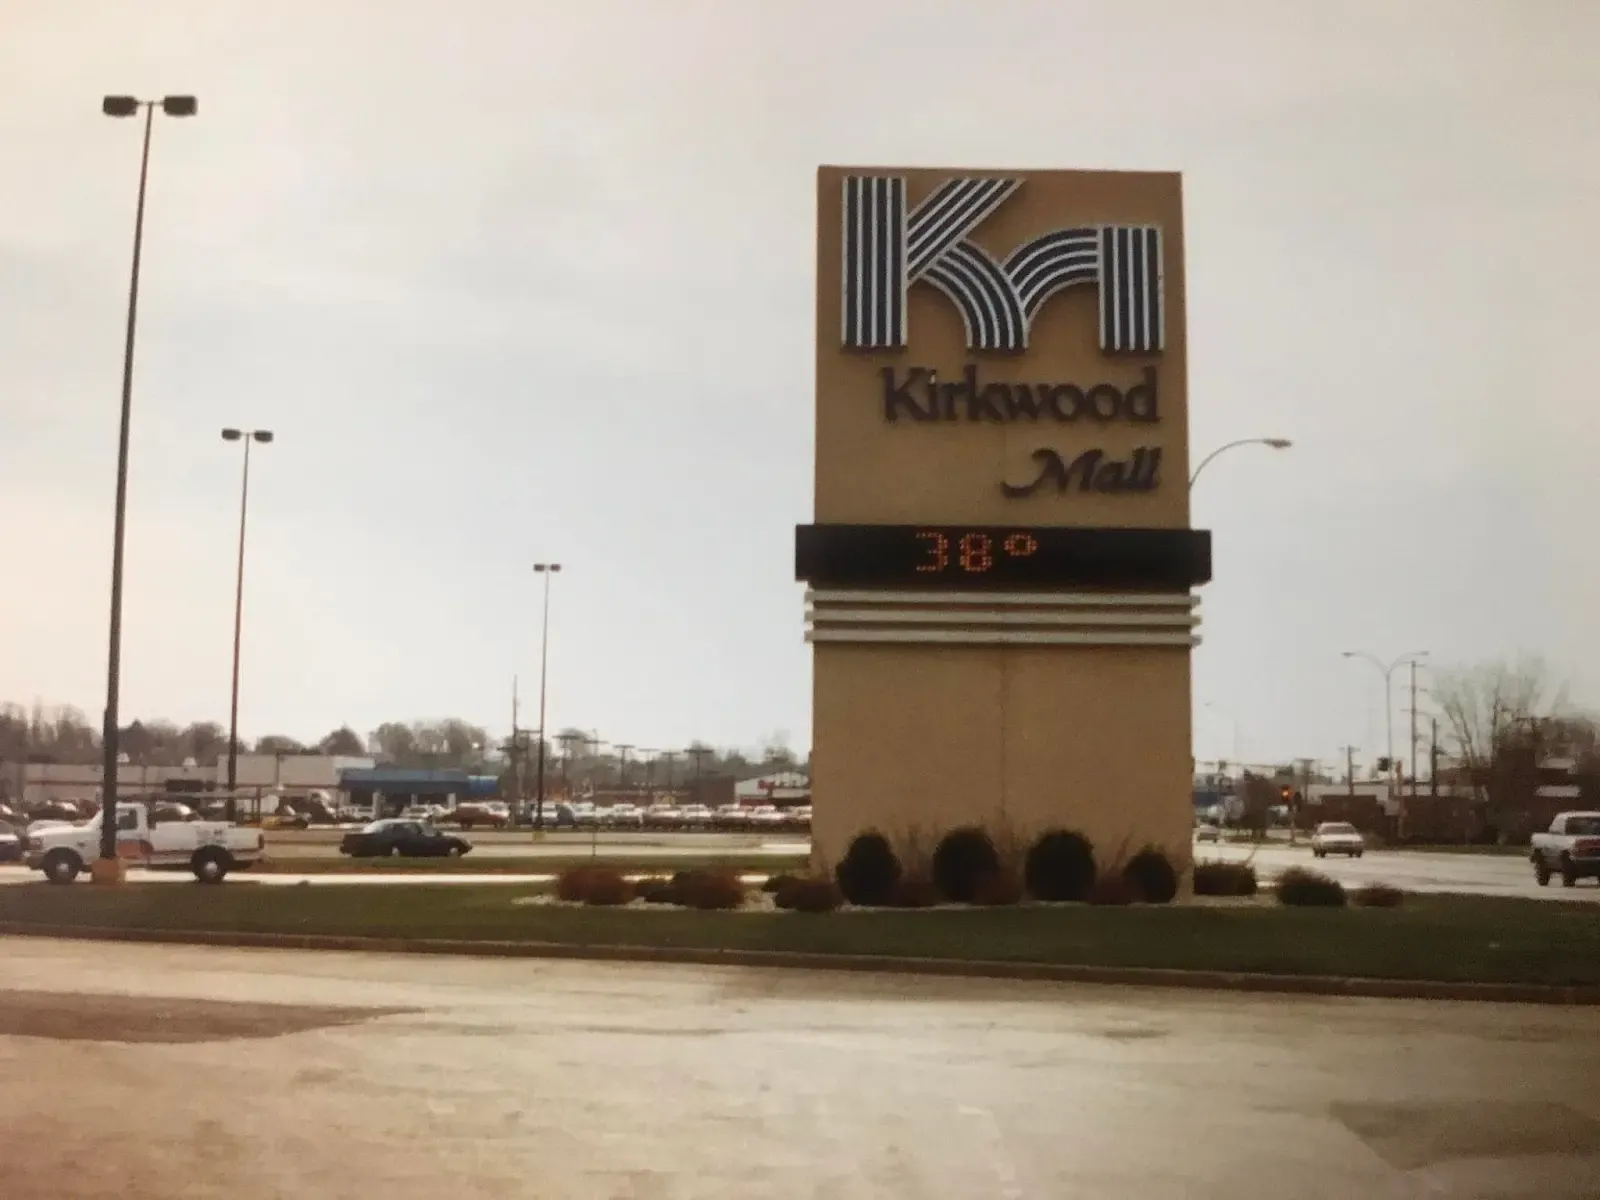 Kirkwood Mall